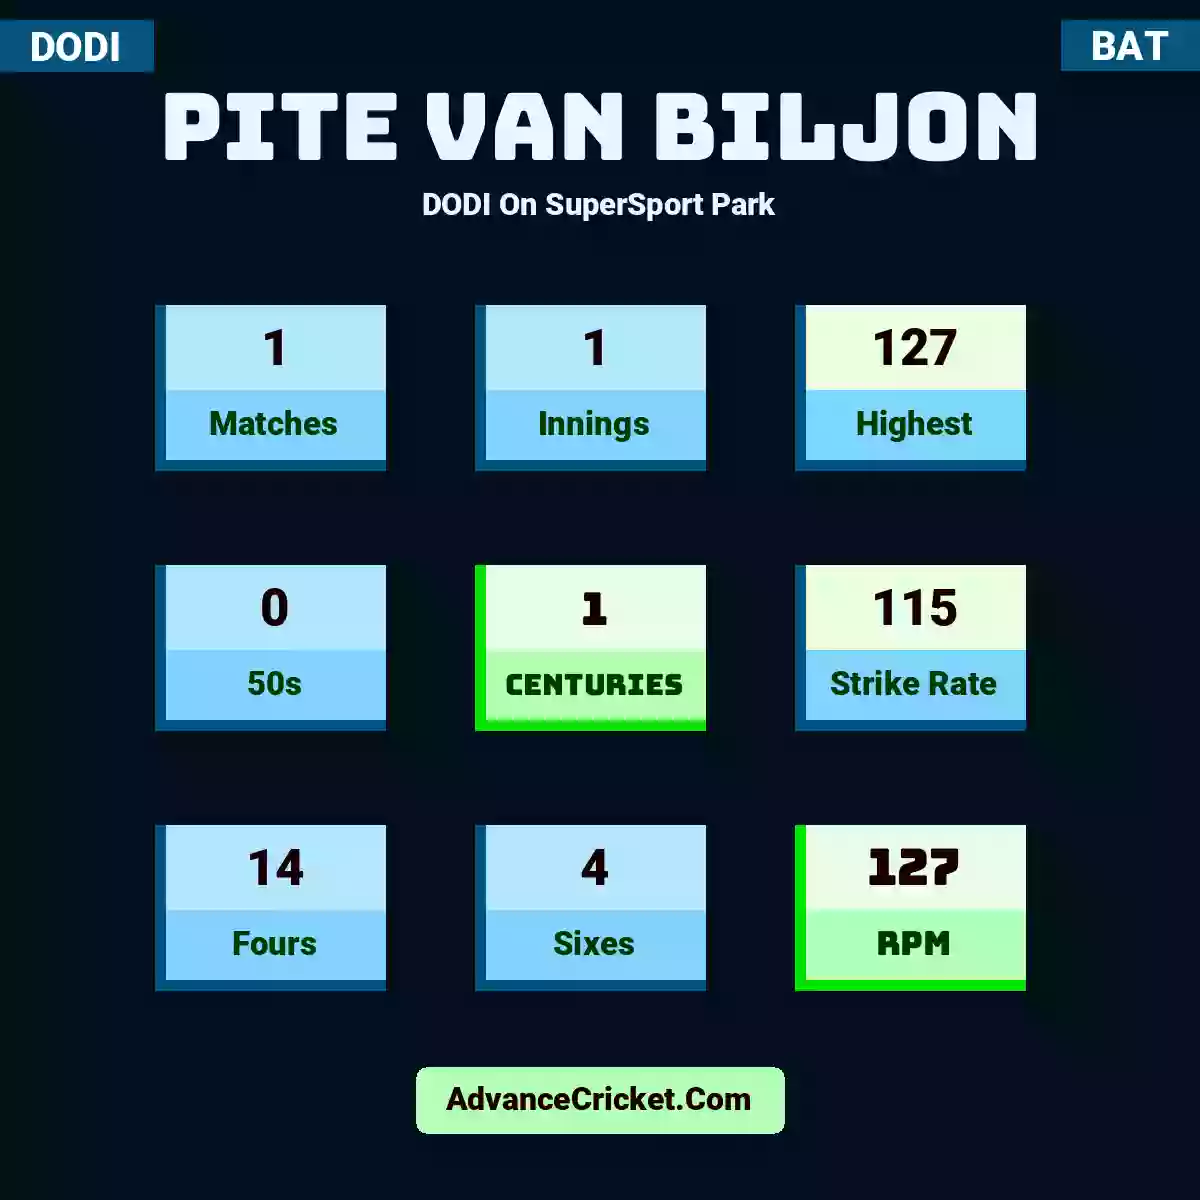 Pite van Biljon DODI  On SuperSport Park, Pite van Biljon played 1 matches, scored 127 runs as highest, 0 half-centuries, and 1 centuries, with a strike rate of 115. P.VBiljon hit 14 fours and 4 sixes, with an RPM of 127.